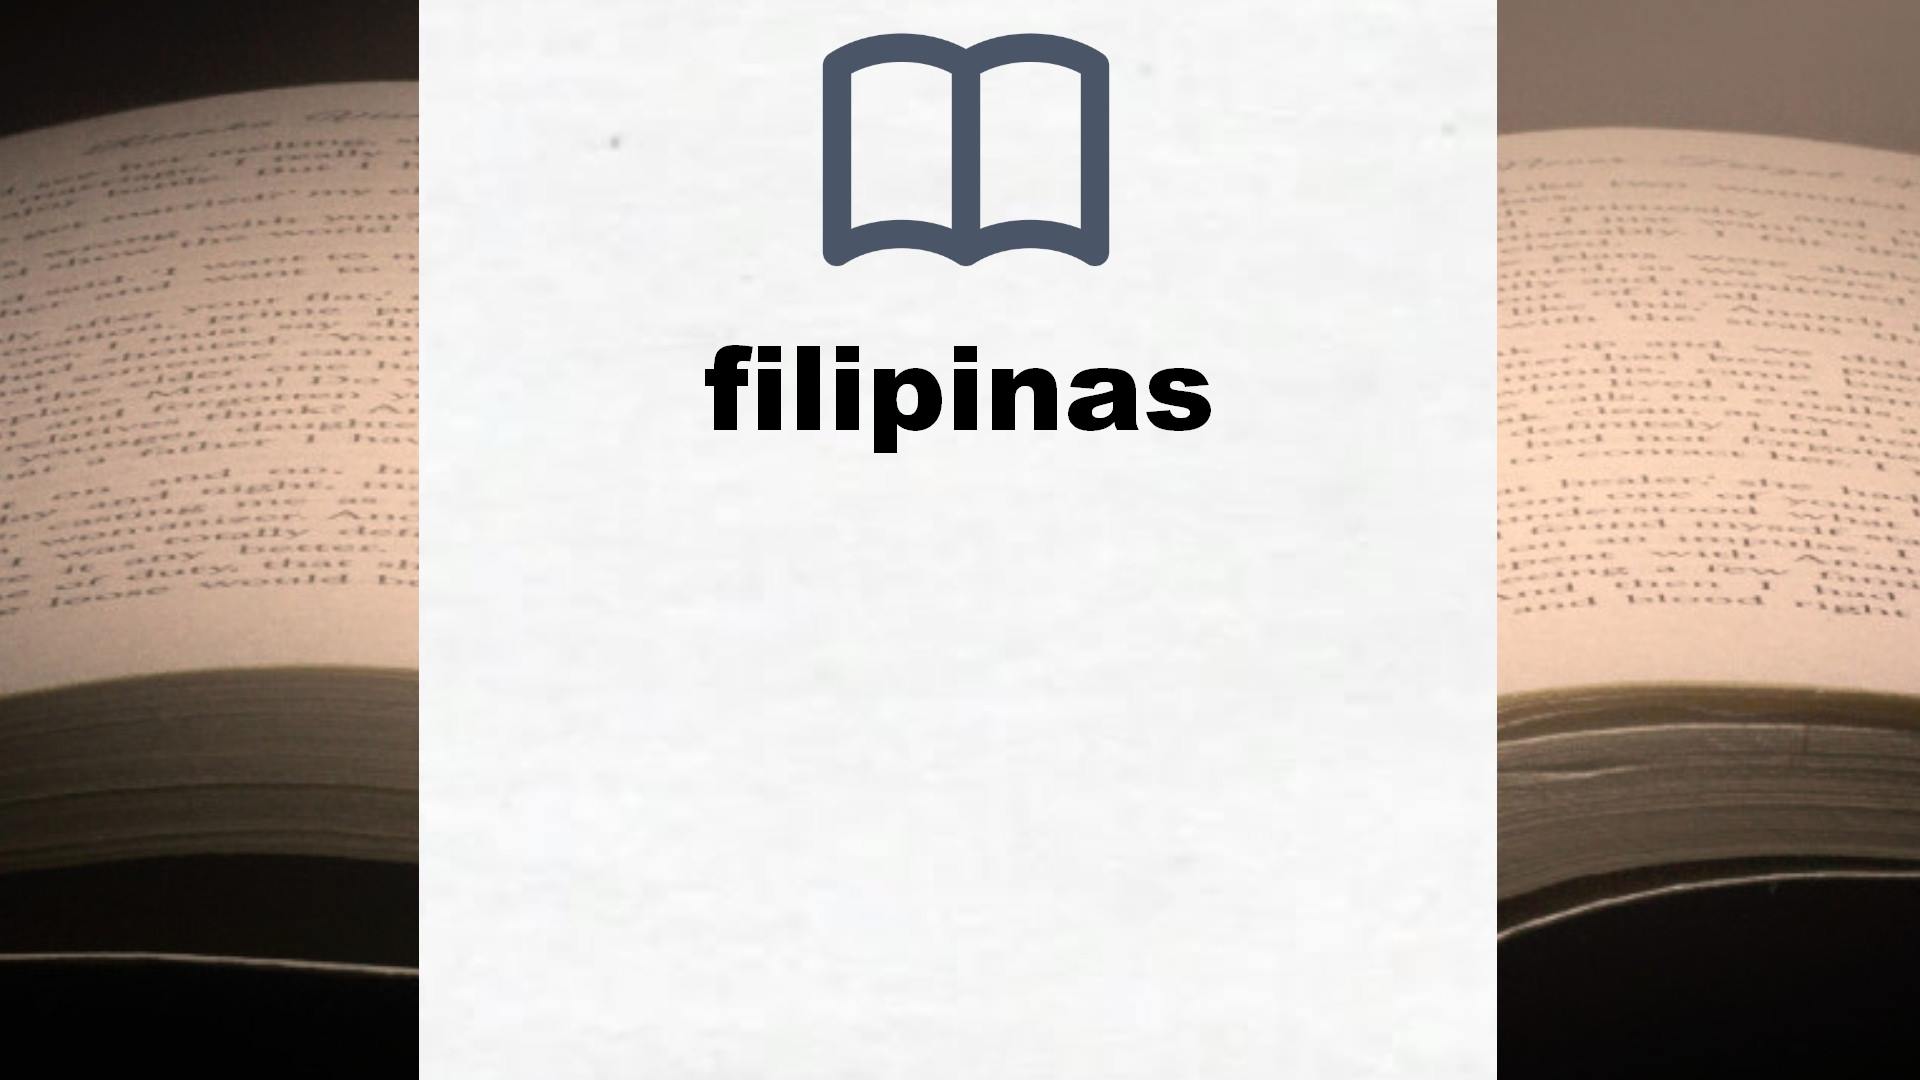 Libros sobre filipinas